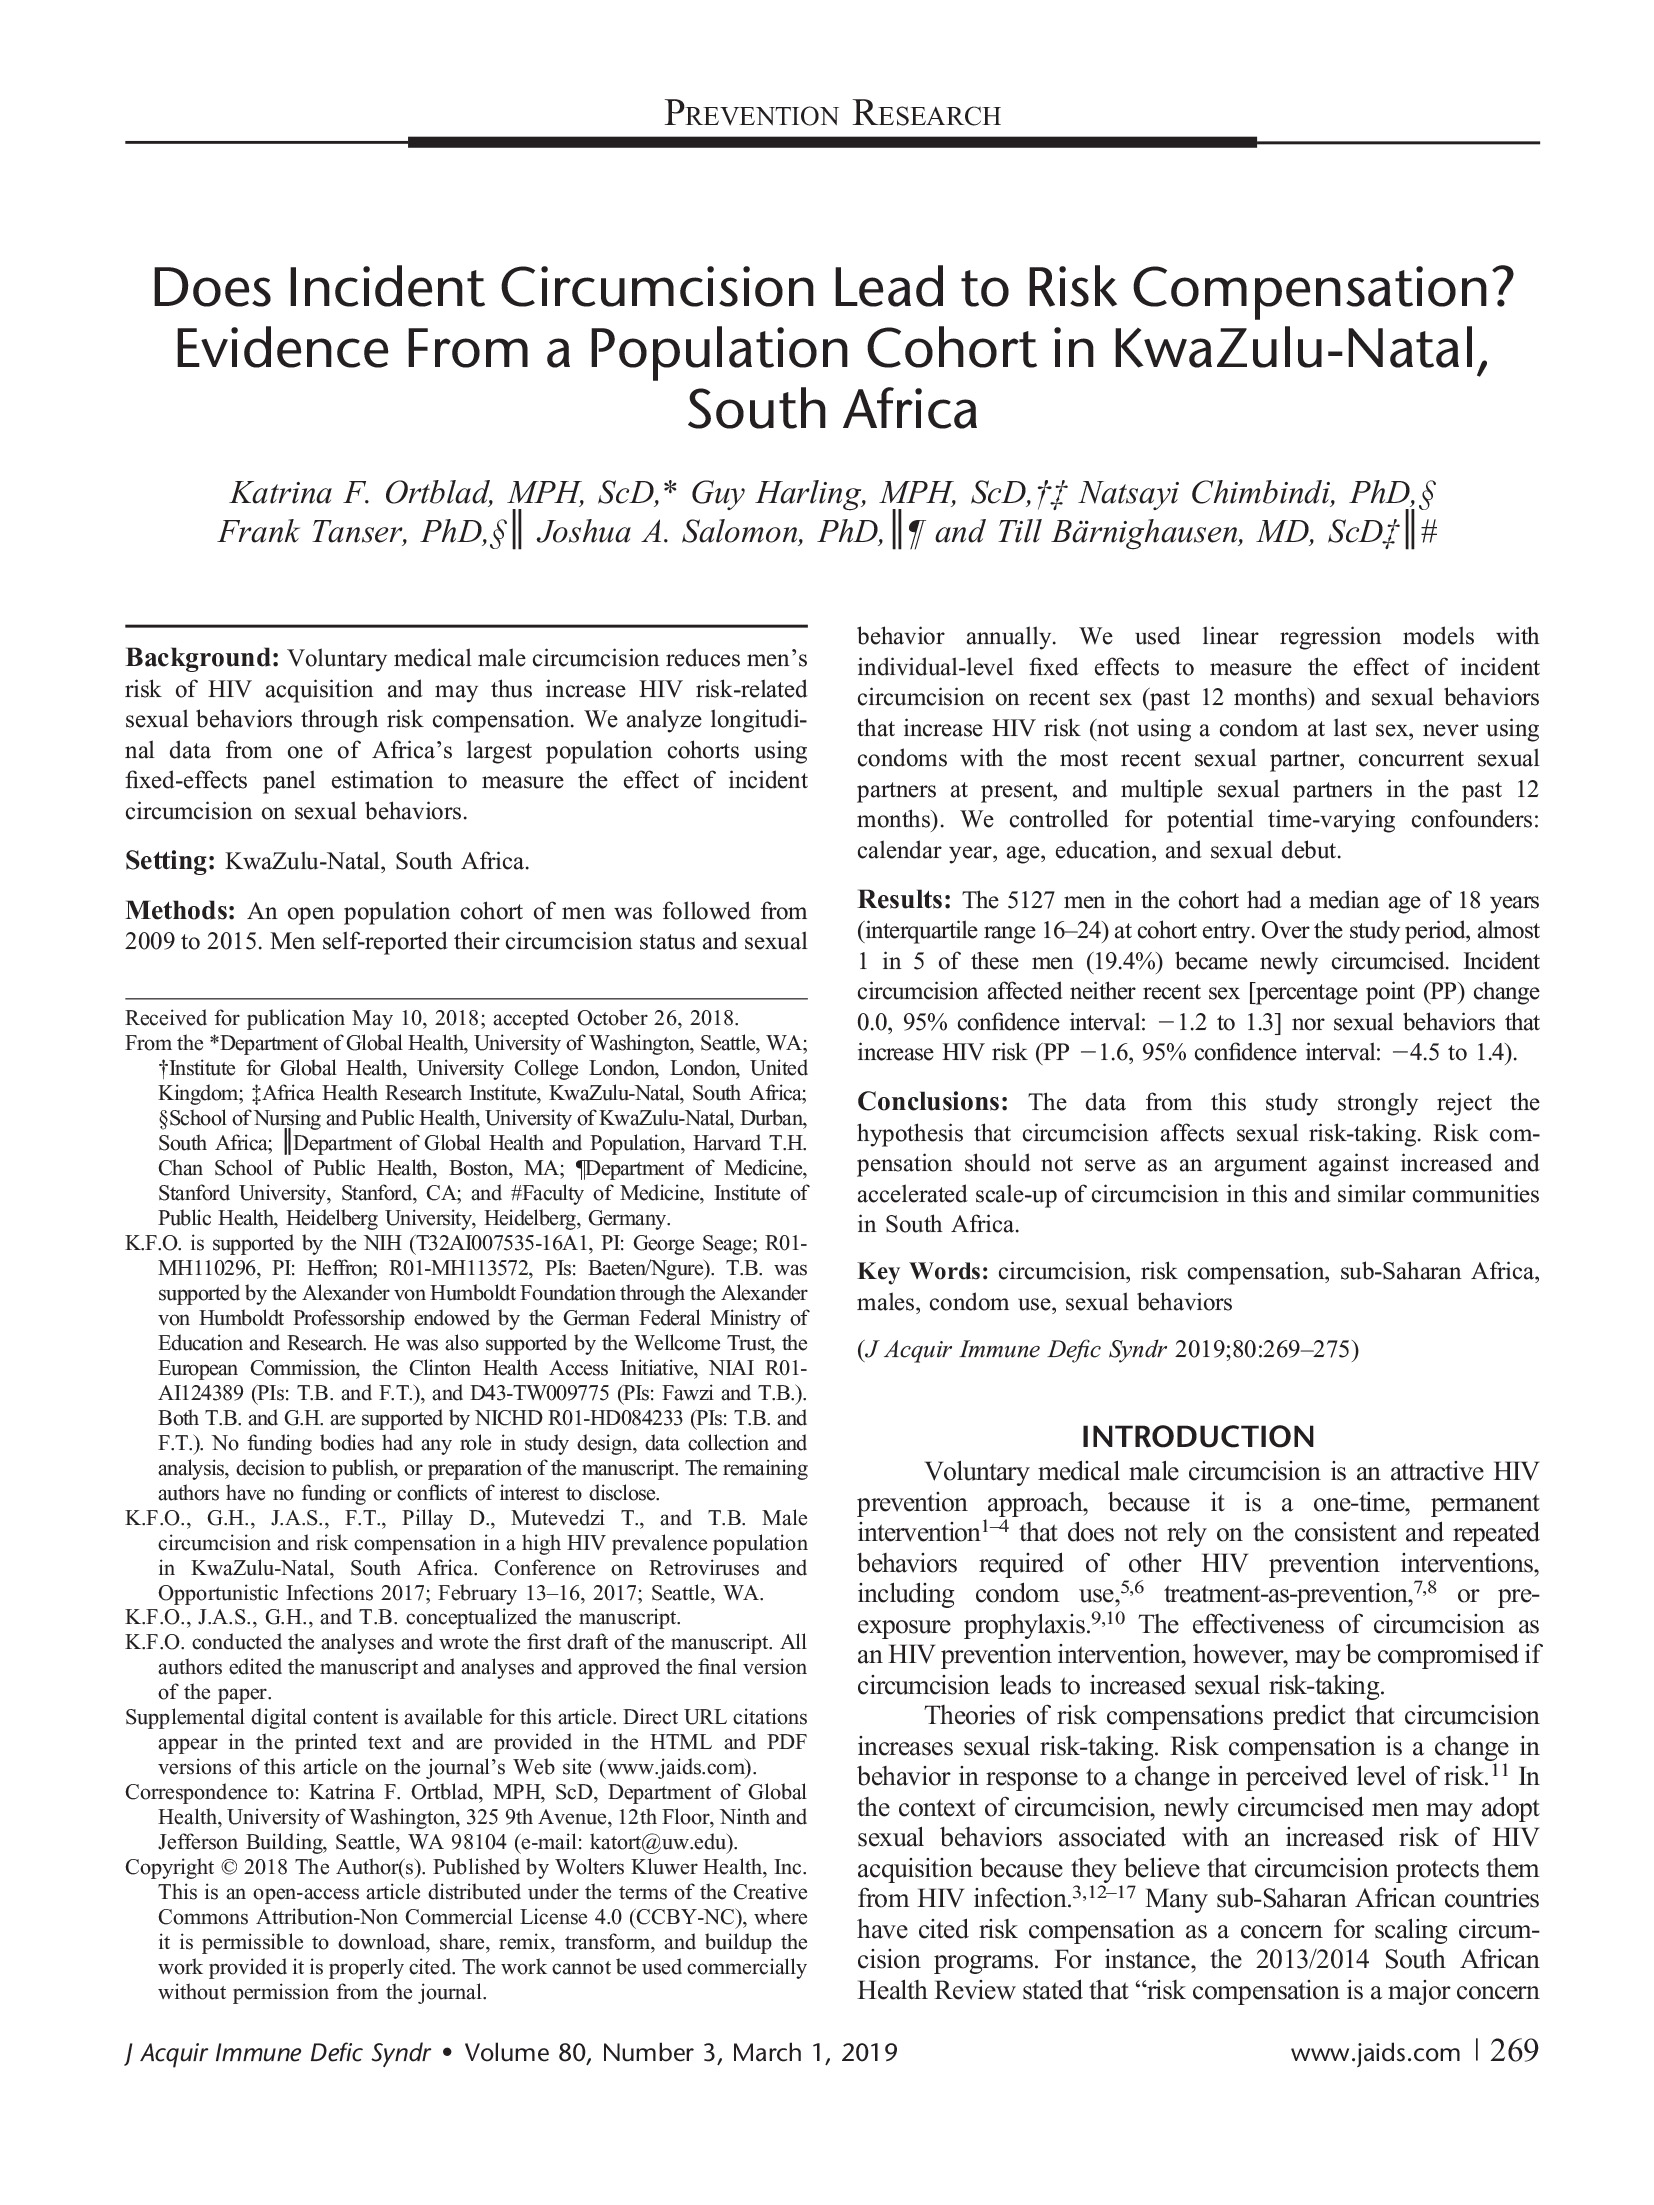 La circoncision incidente conduit-elle à une compensation des risques ? Evidence from a Population Cohort in KwaZulu-Natal, South Africa - cover